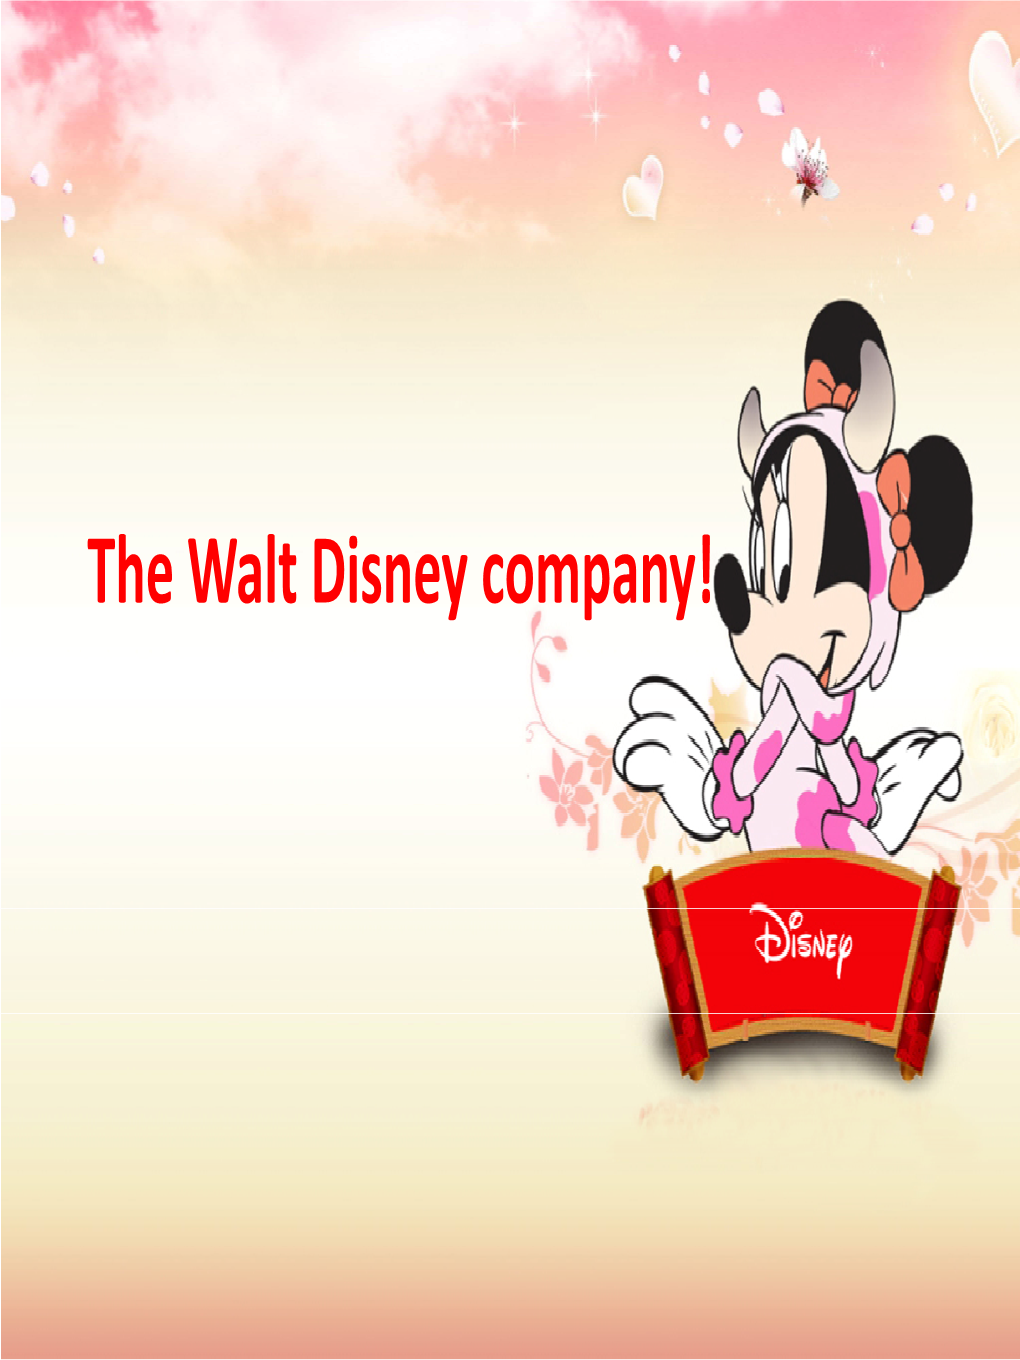 The Walt Disney Company!